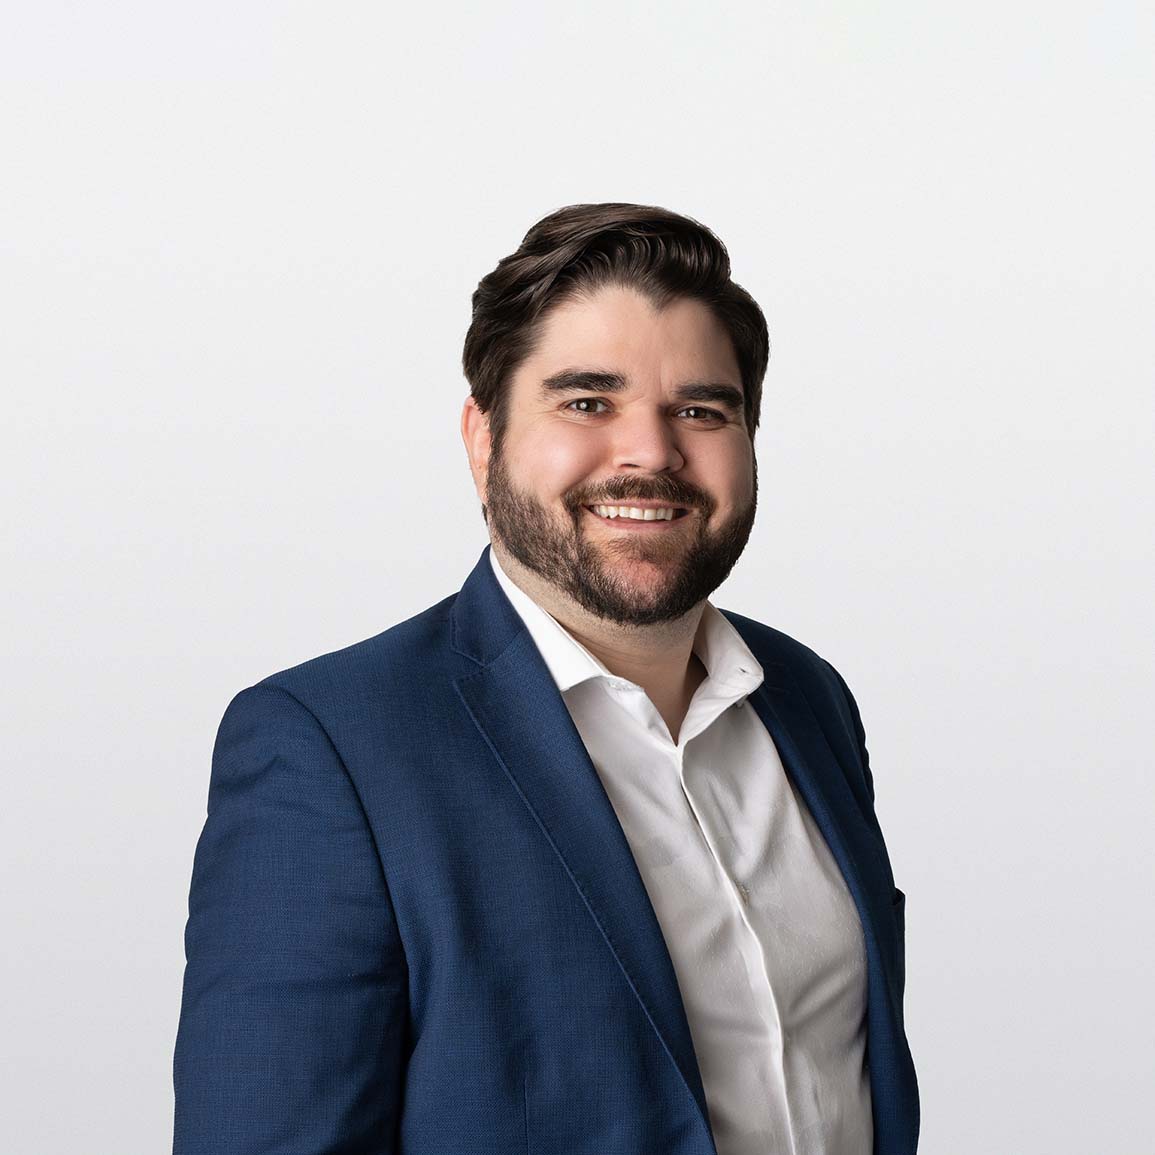 Image of Marc Pepin Financial Advisor on white background